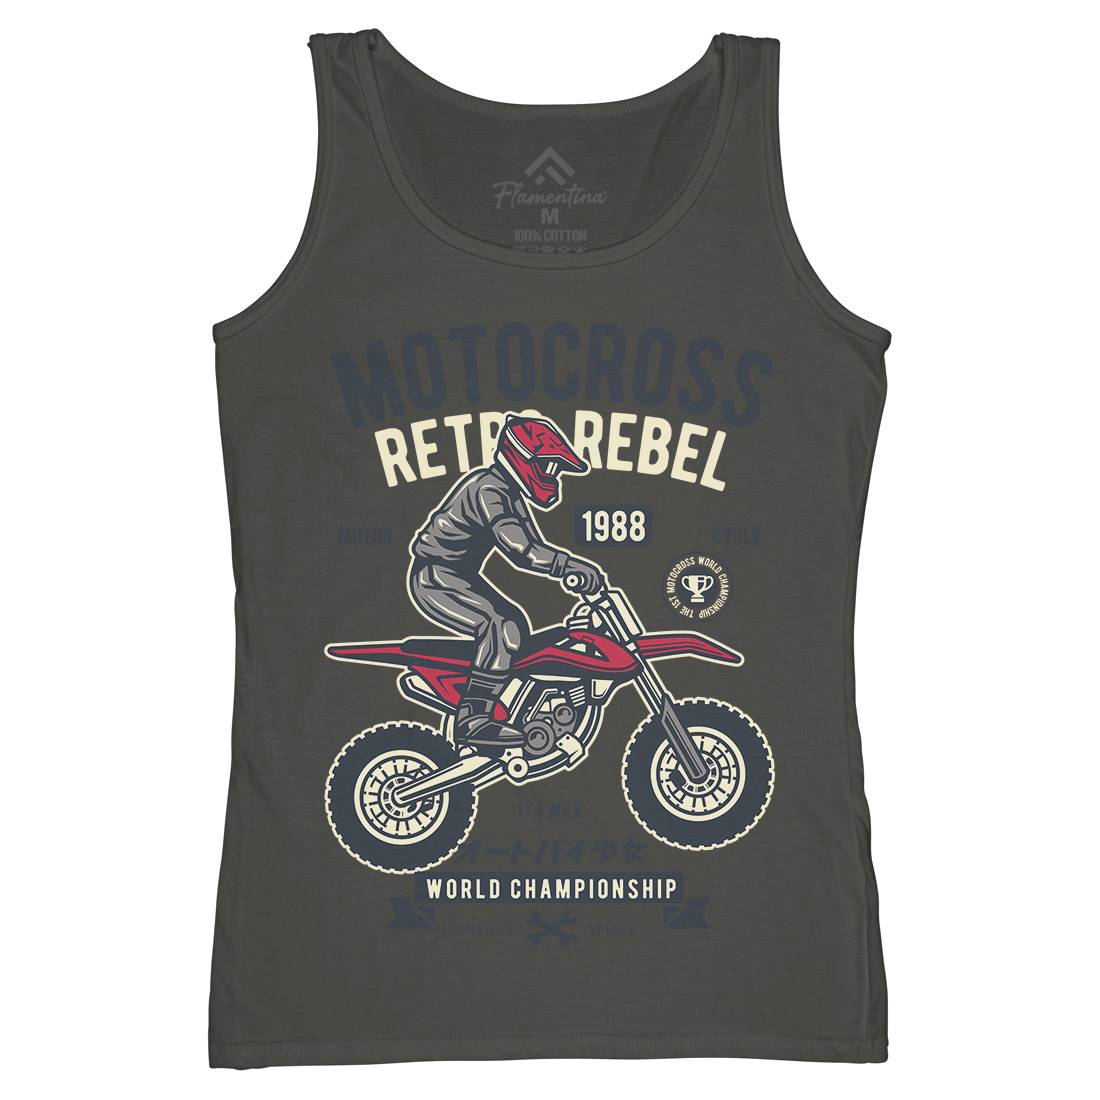 Motocross Retro Rebel Womens Organic Tank Top Vest Motorcycles D553